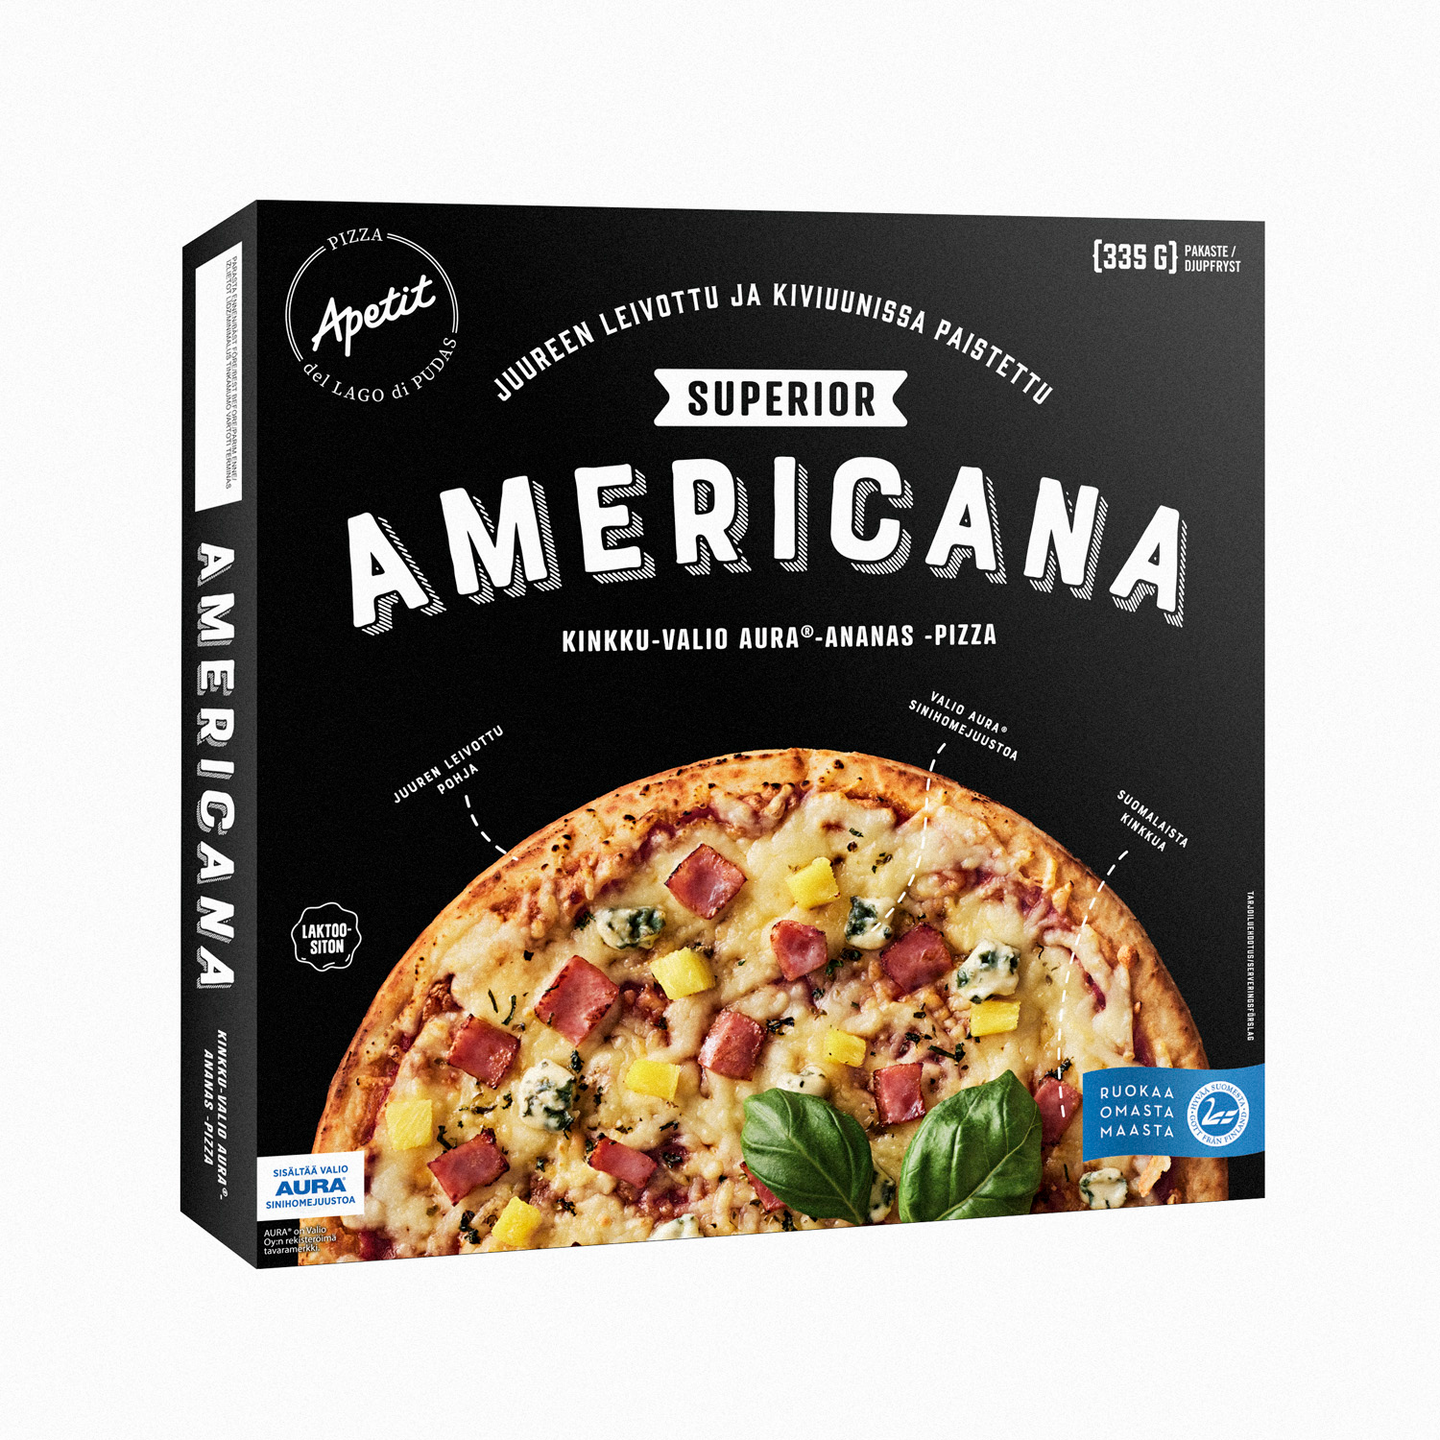 Apetit Superior Americana Pizza 335g pakaste